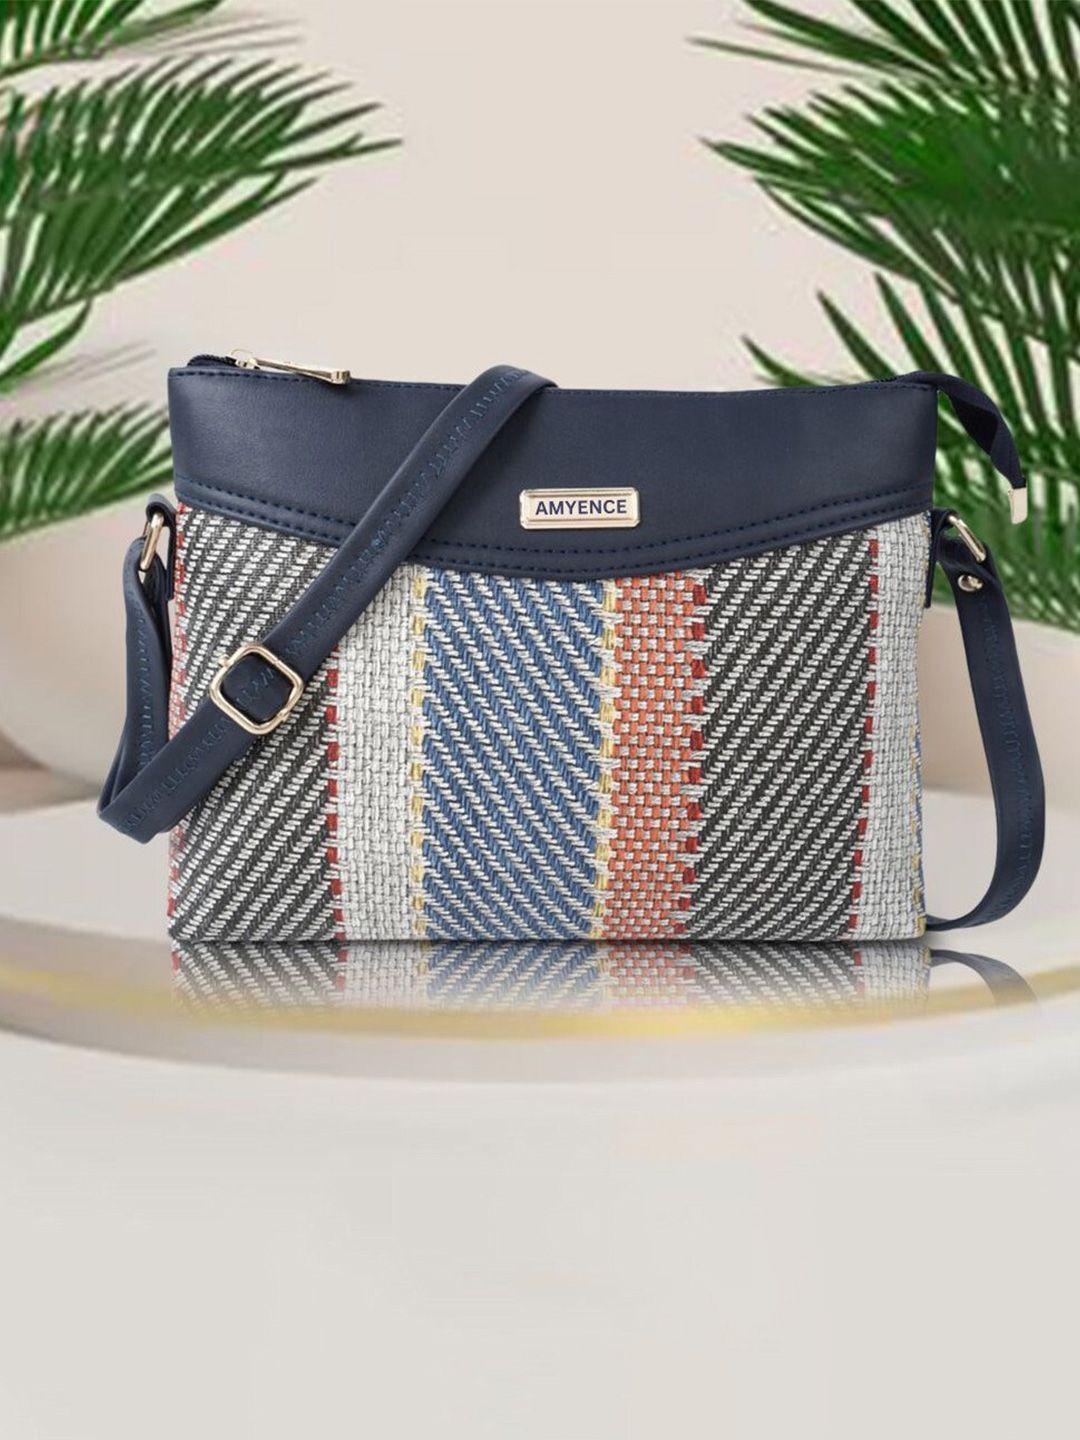 amyence self-designed sling bag